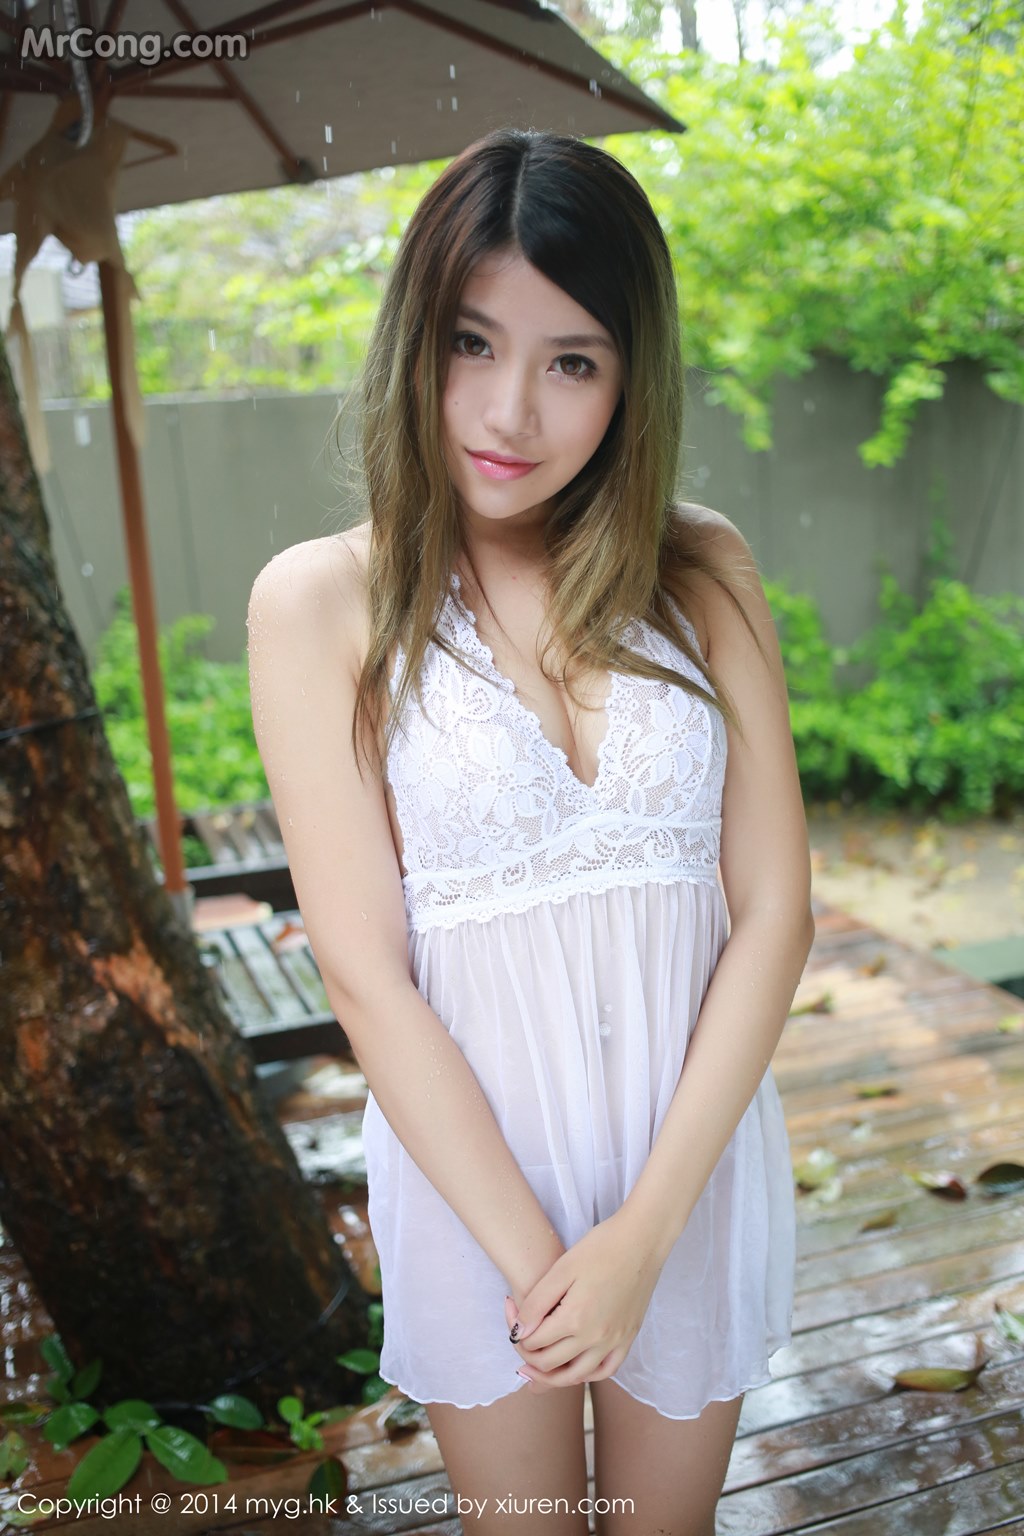 MyGirl Vol.023: Model Sabrina (许诺) (61 pictures) photo 1-18